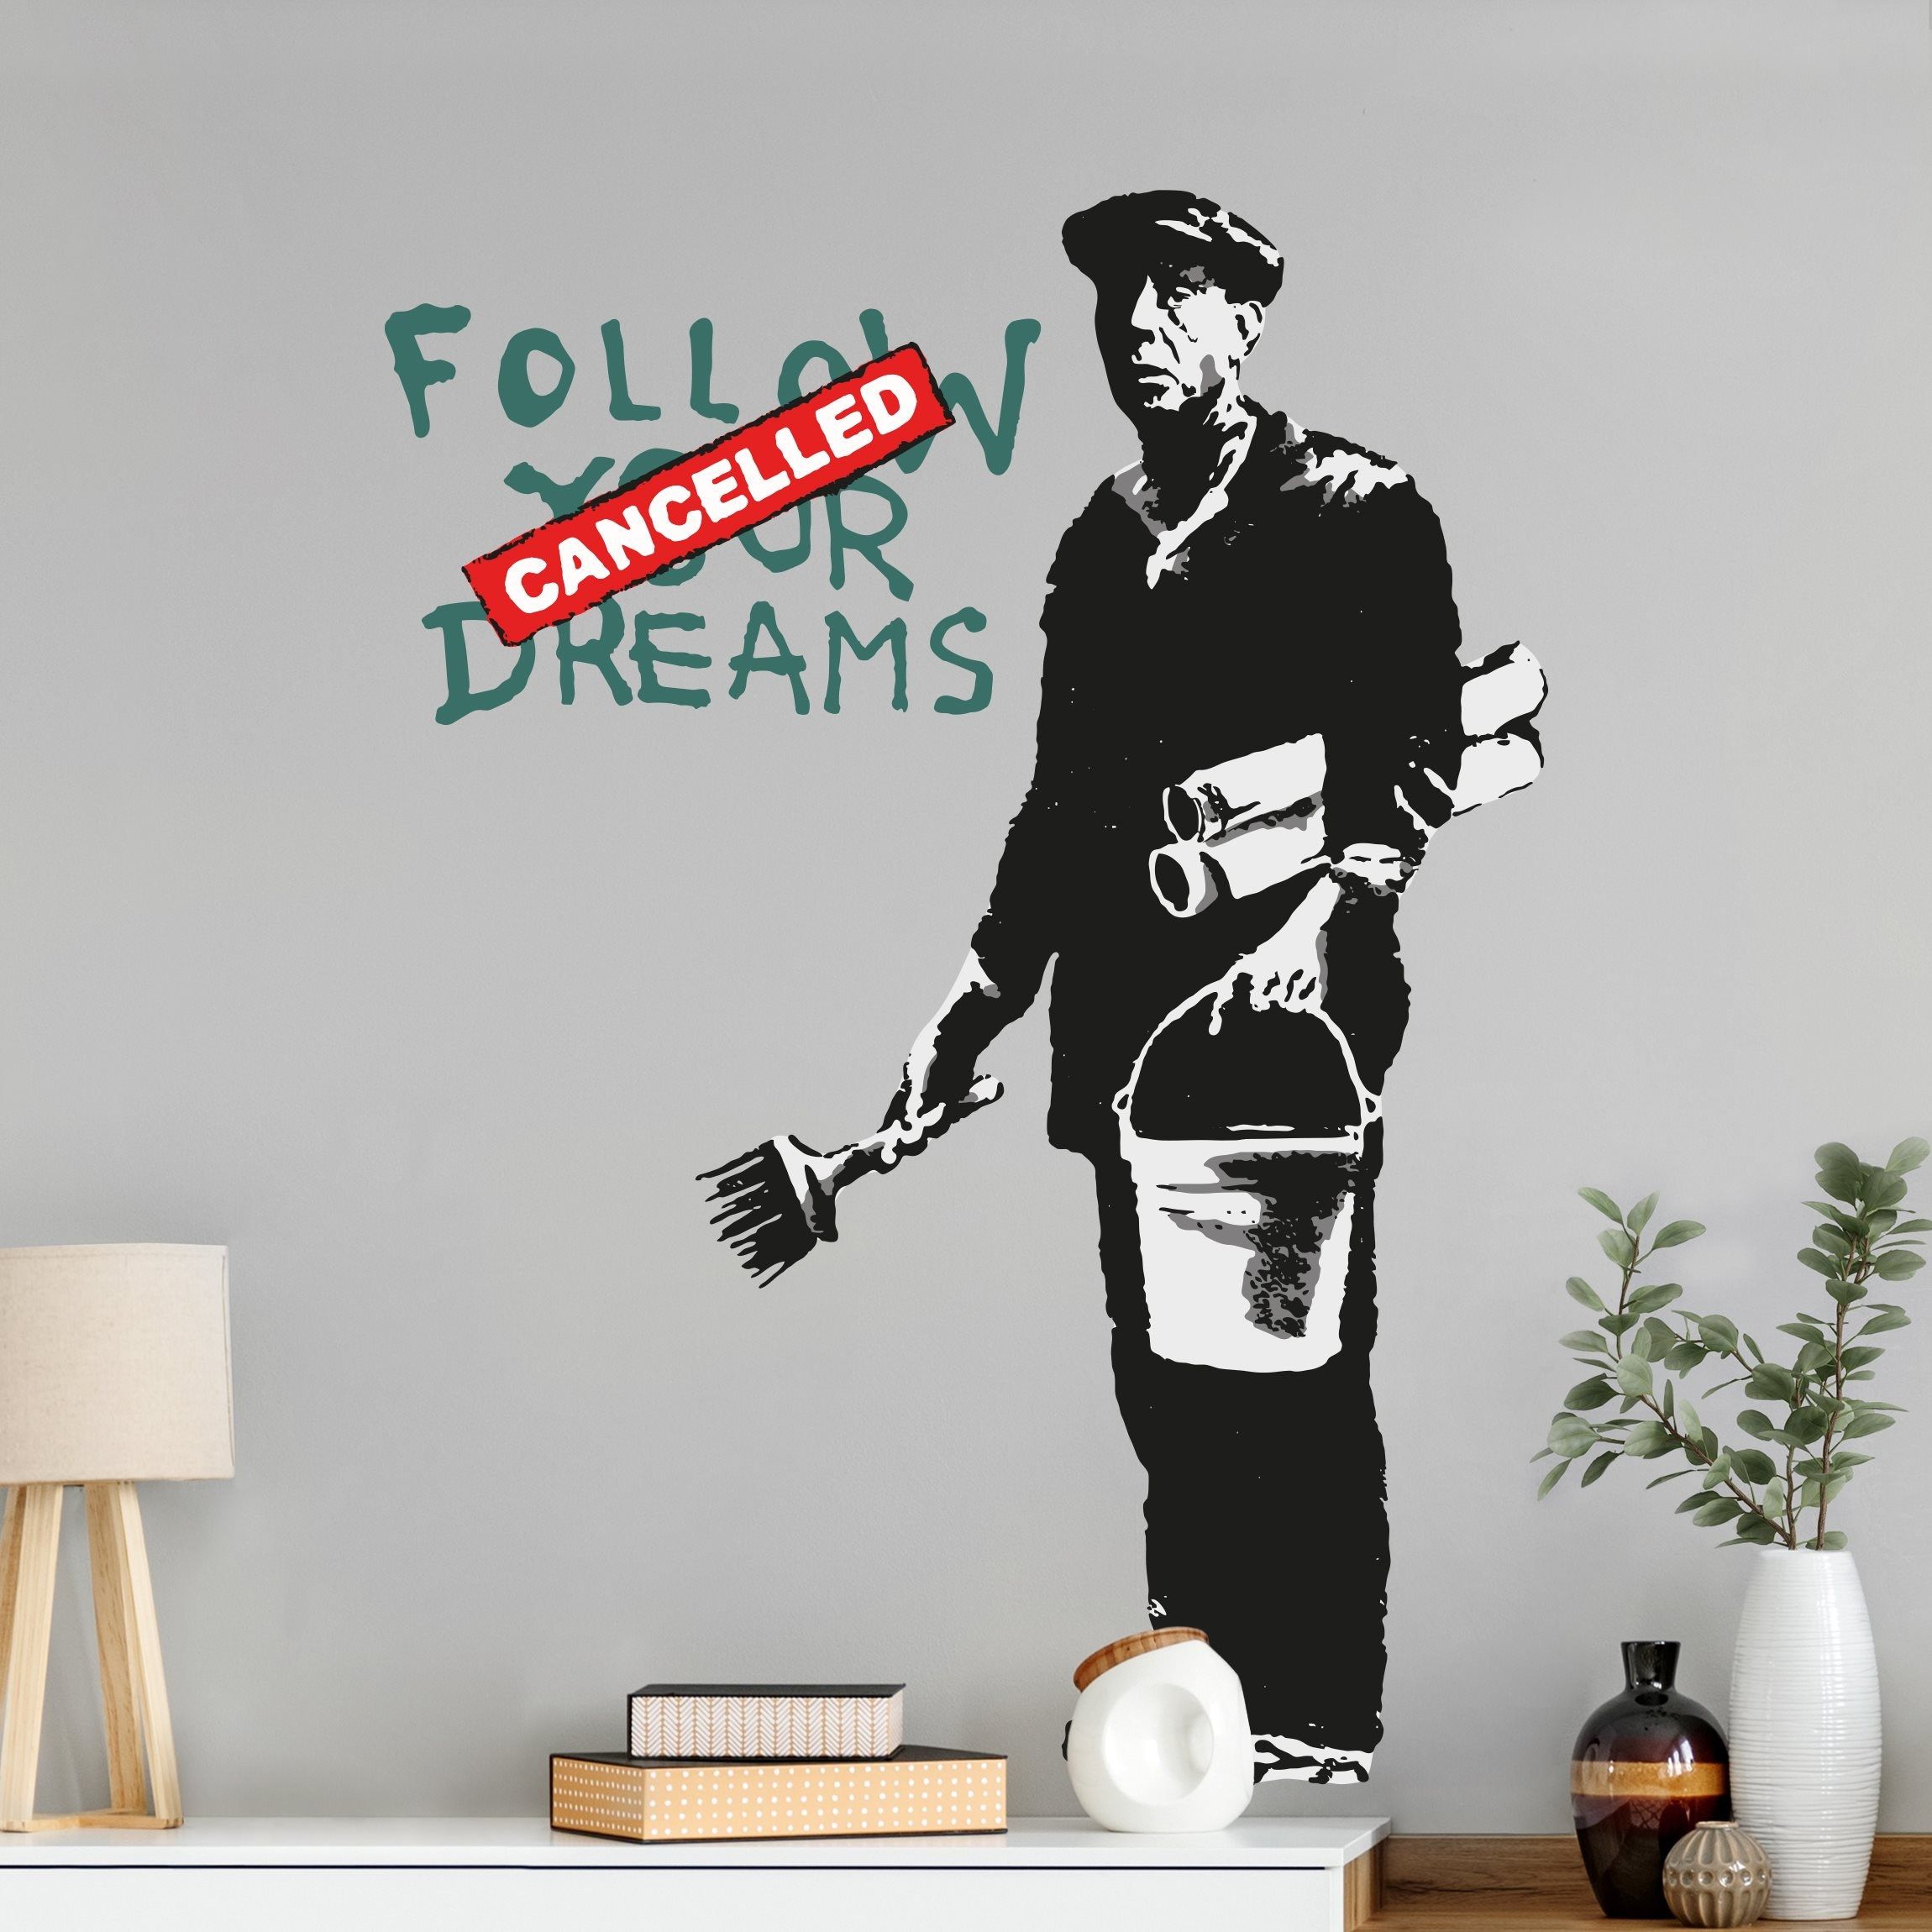 Wandtattoo - Follow Your Dreams II - Brandalised ft. Graffiti by